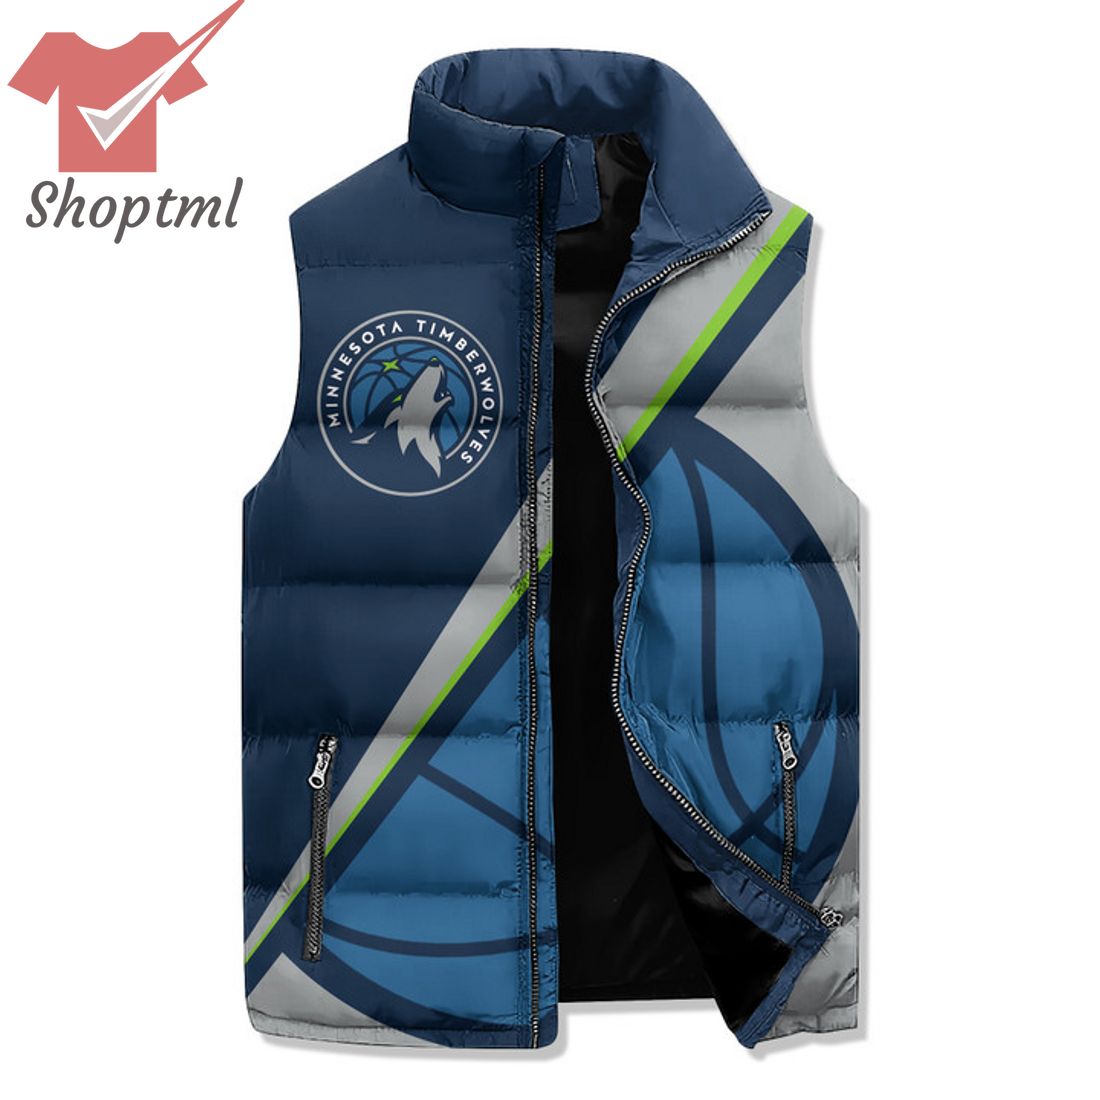 NBA Minnesota Timberwolves Logo Puffer Sleeveless Jacket